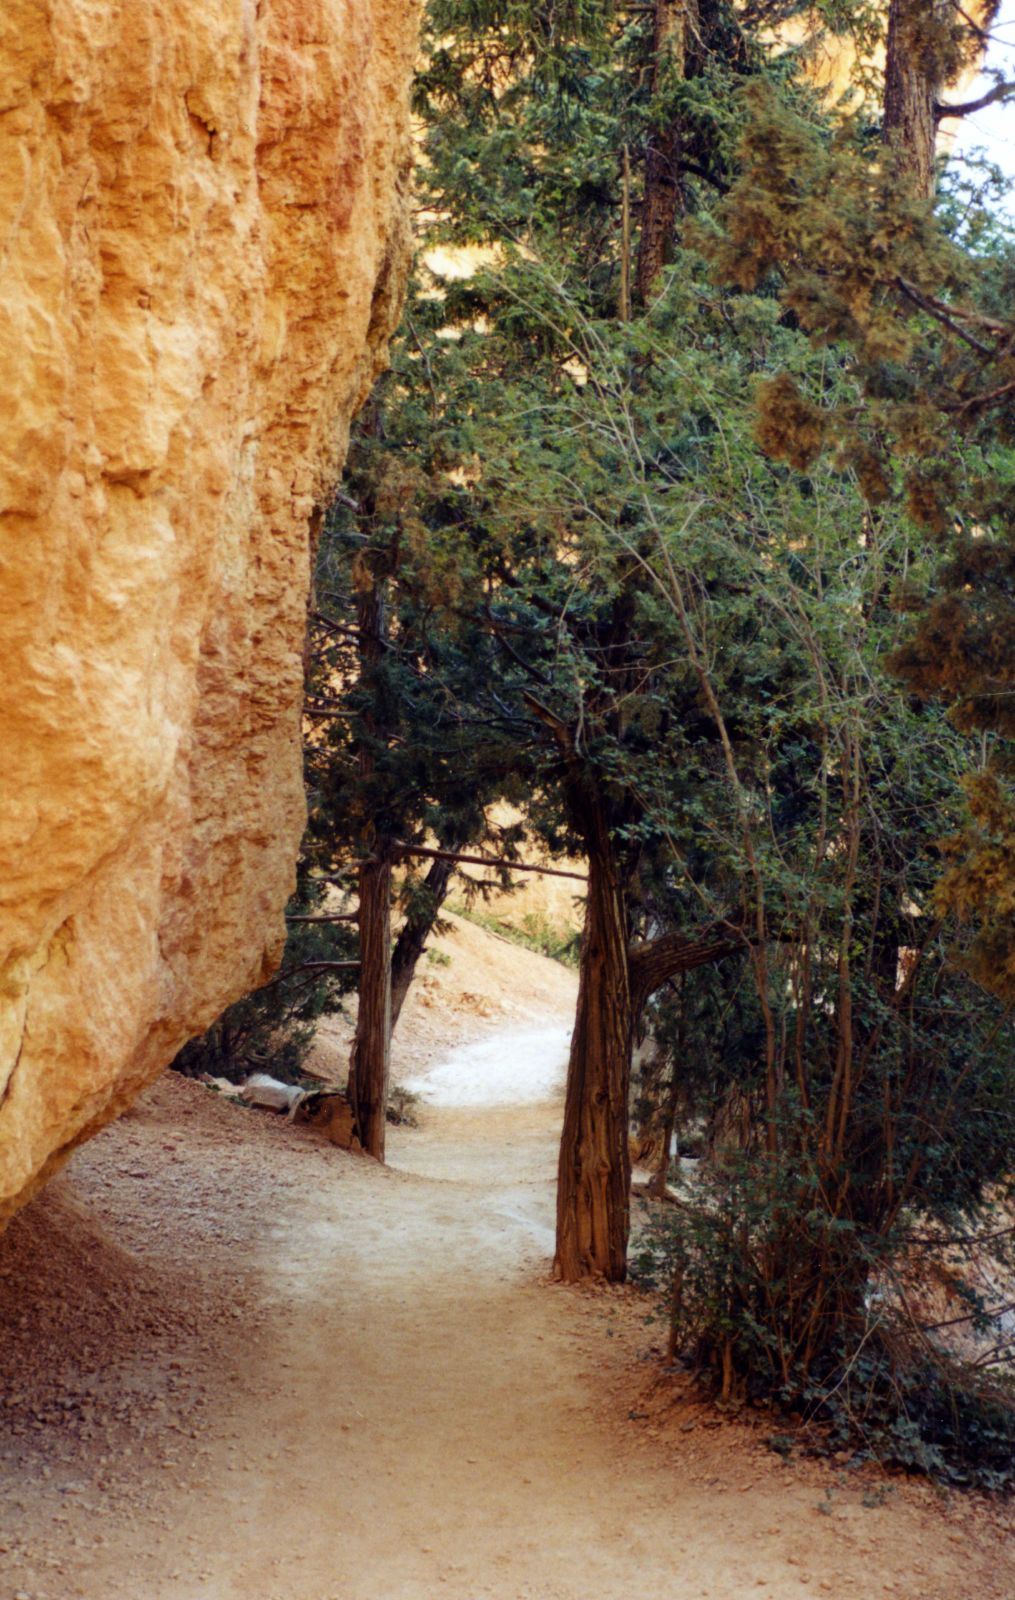 Peekaboo Trail: Trail between the trees  - © BJ flickr user